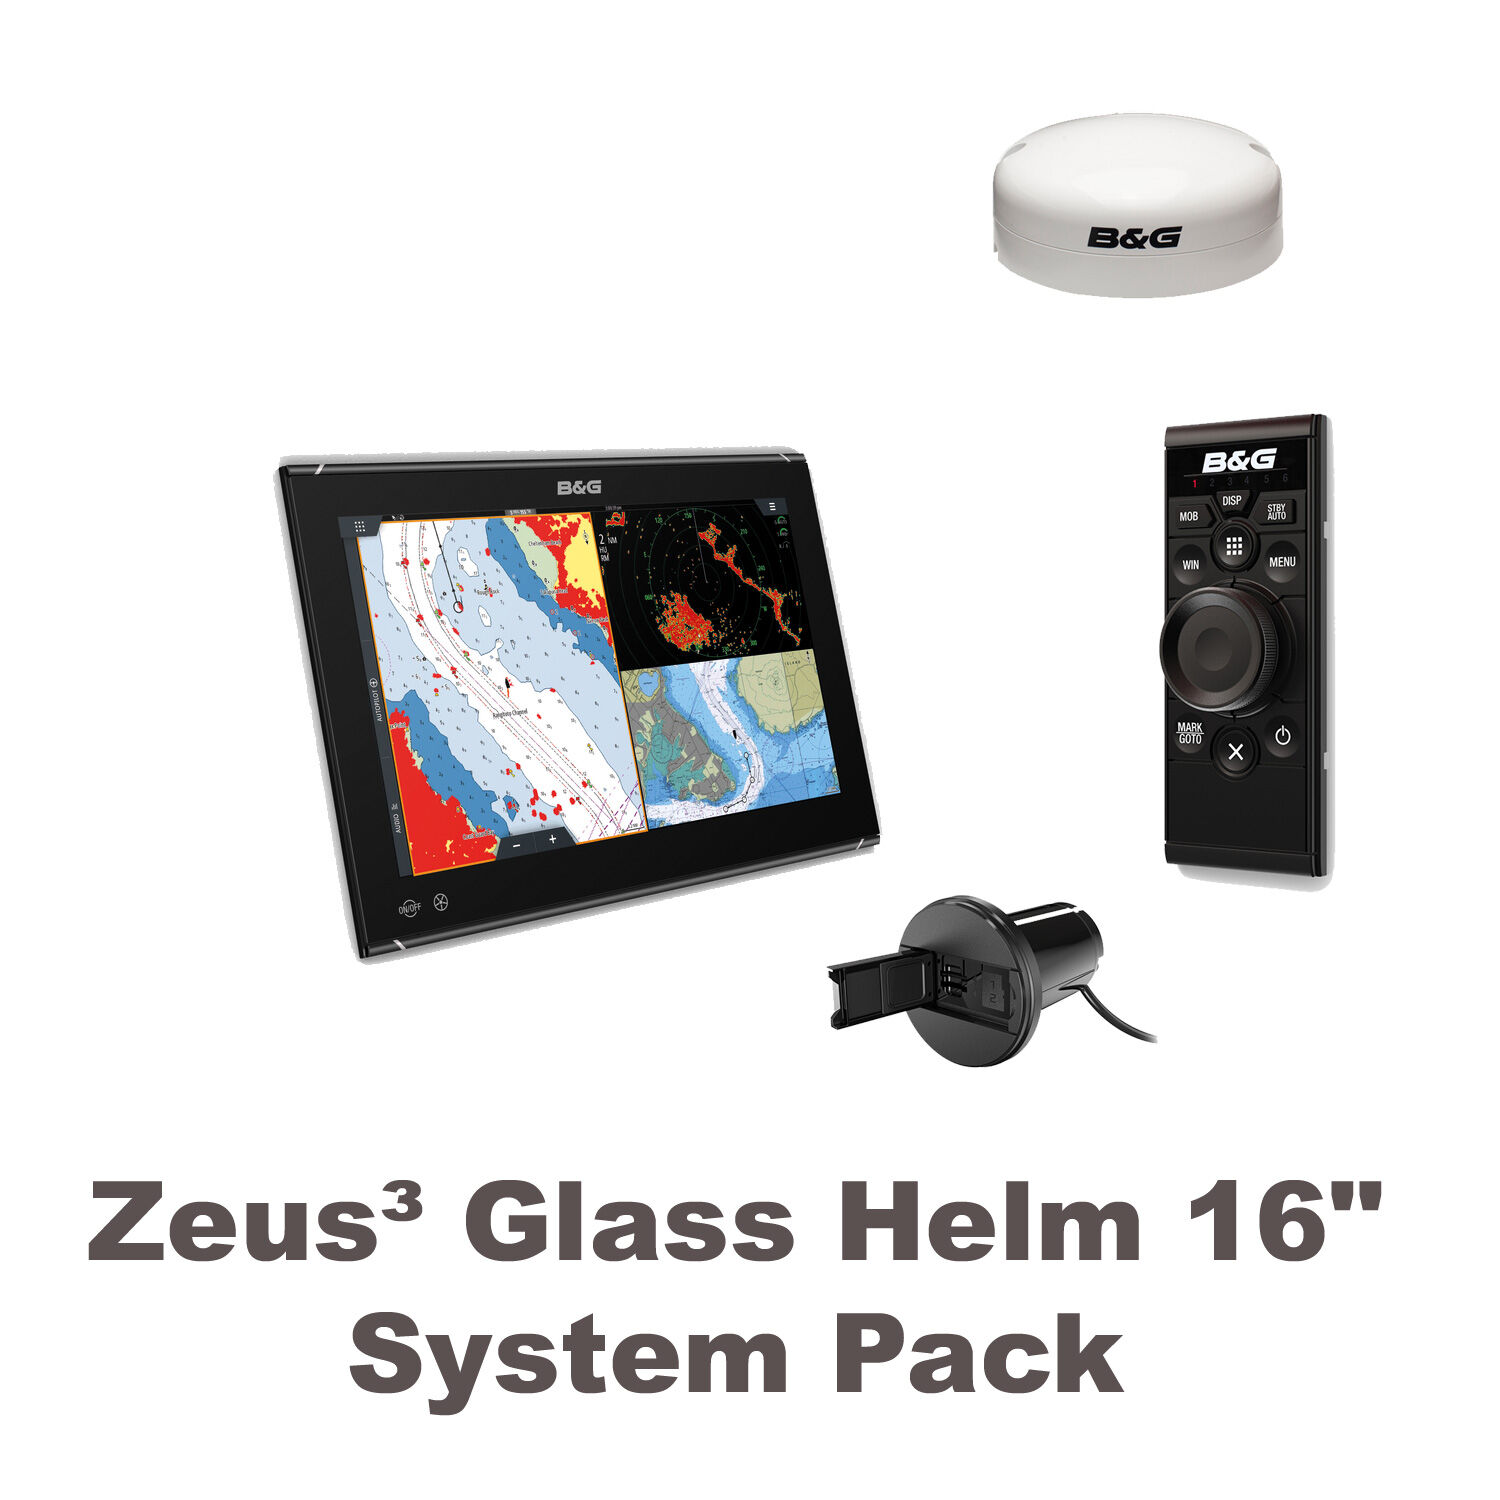 B&G Zeus3 Glass Helm 16" System Paket